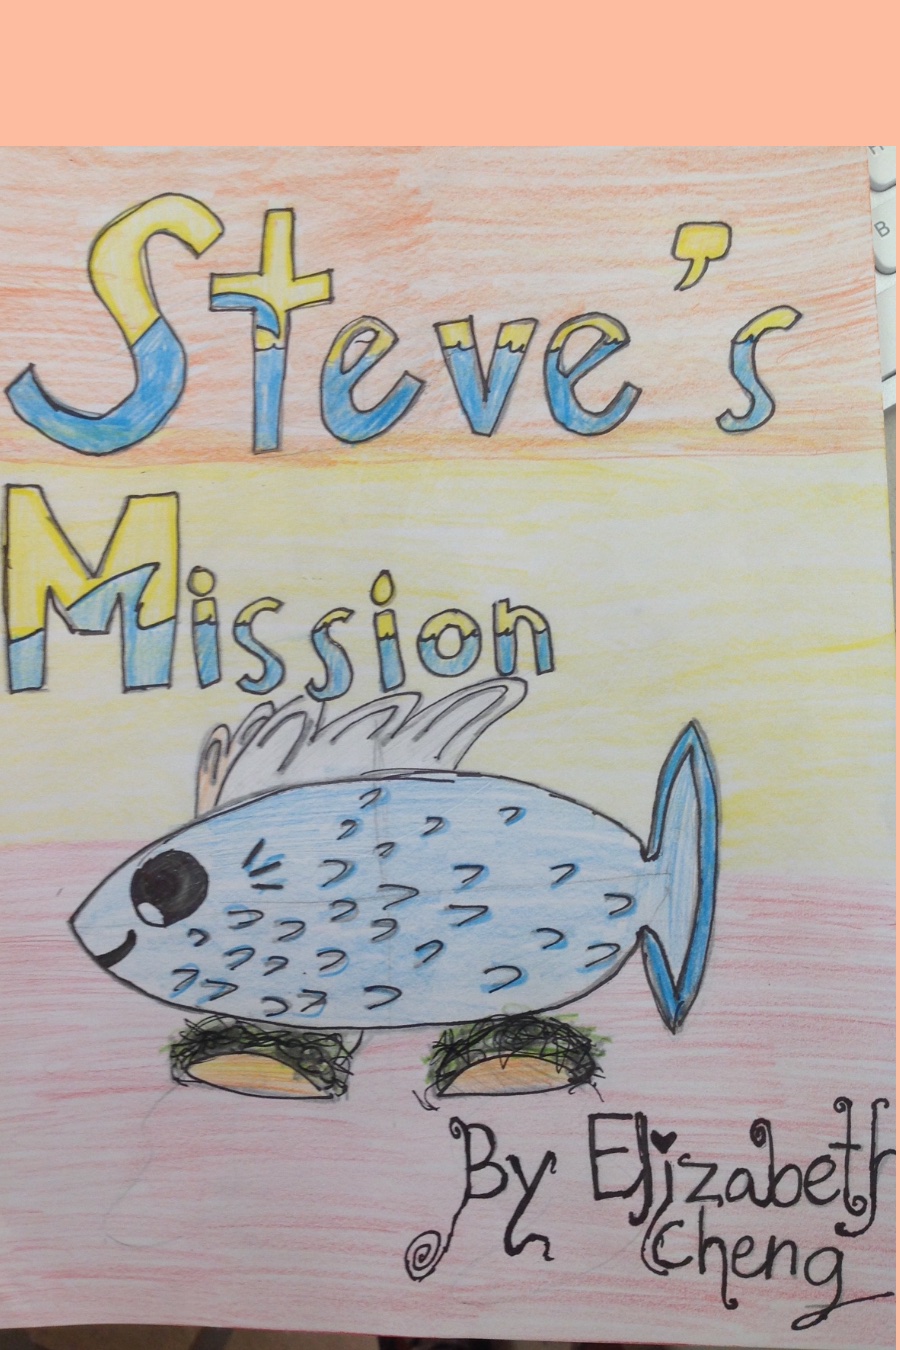 Steve’s Mission by Elizabeth C